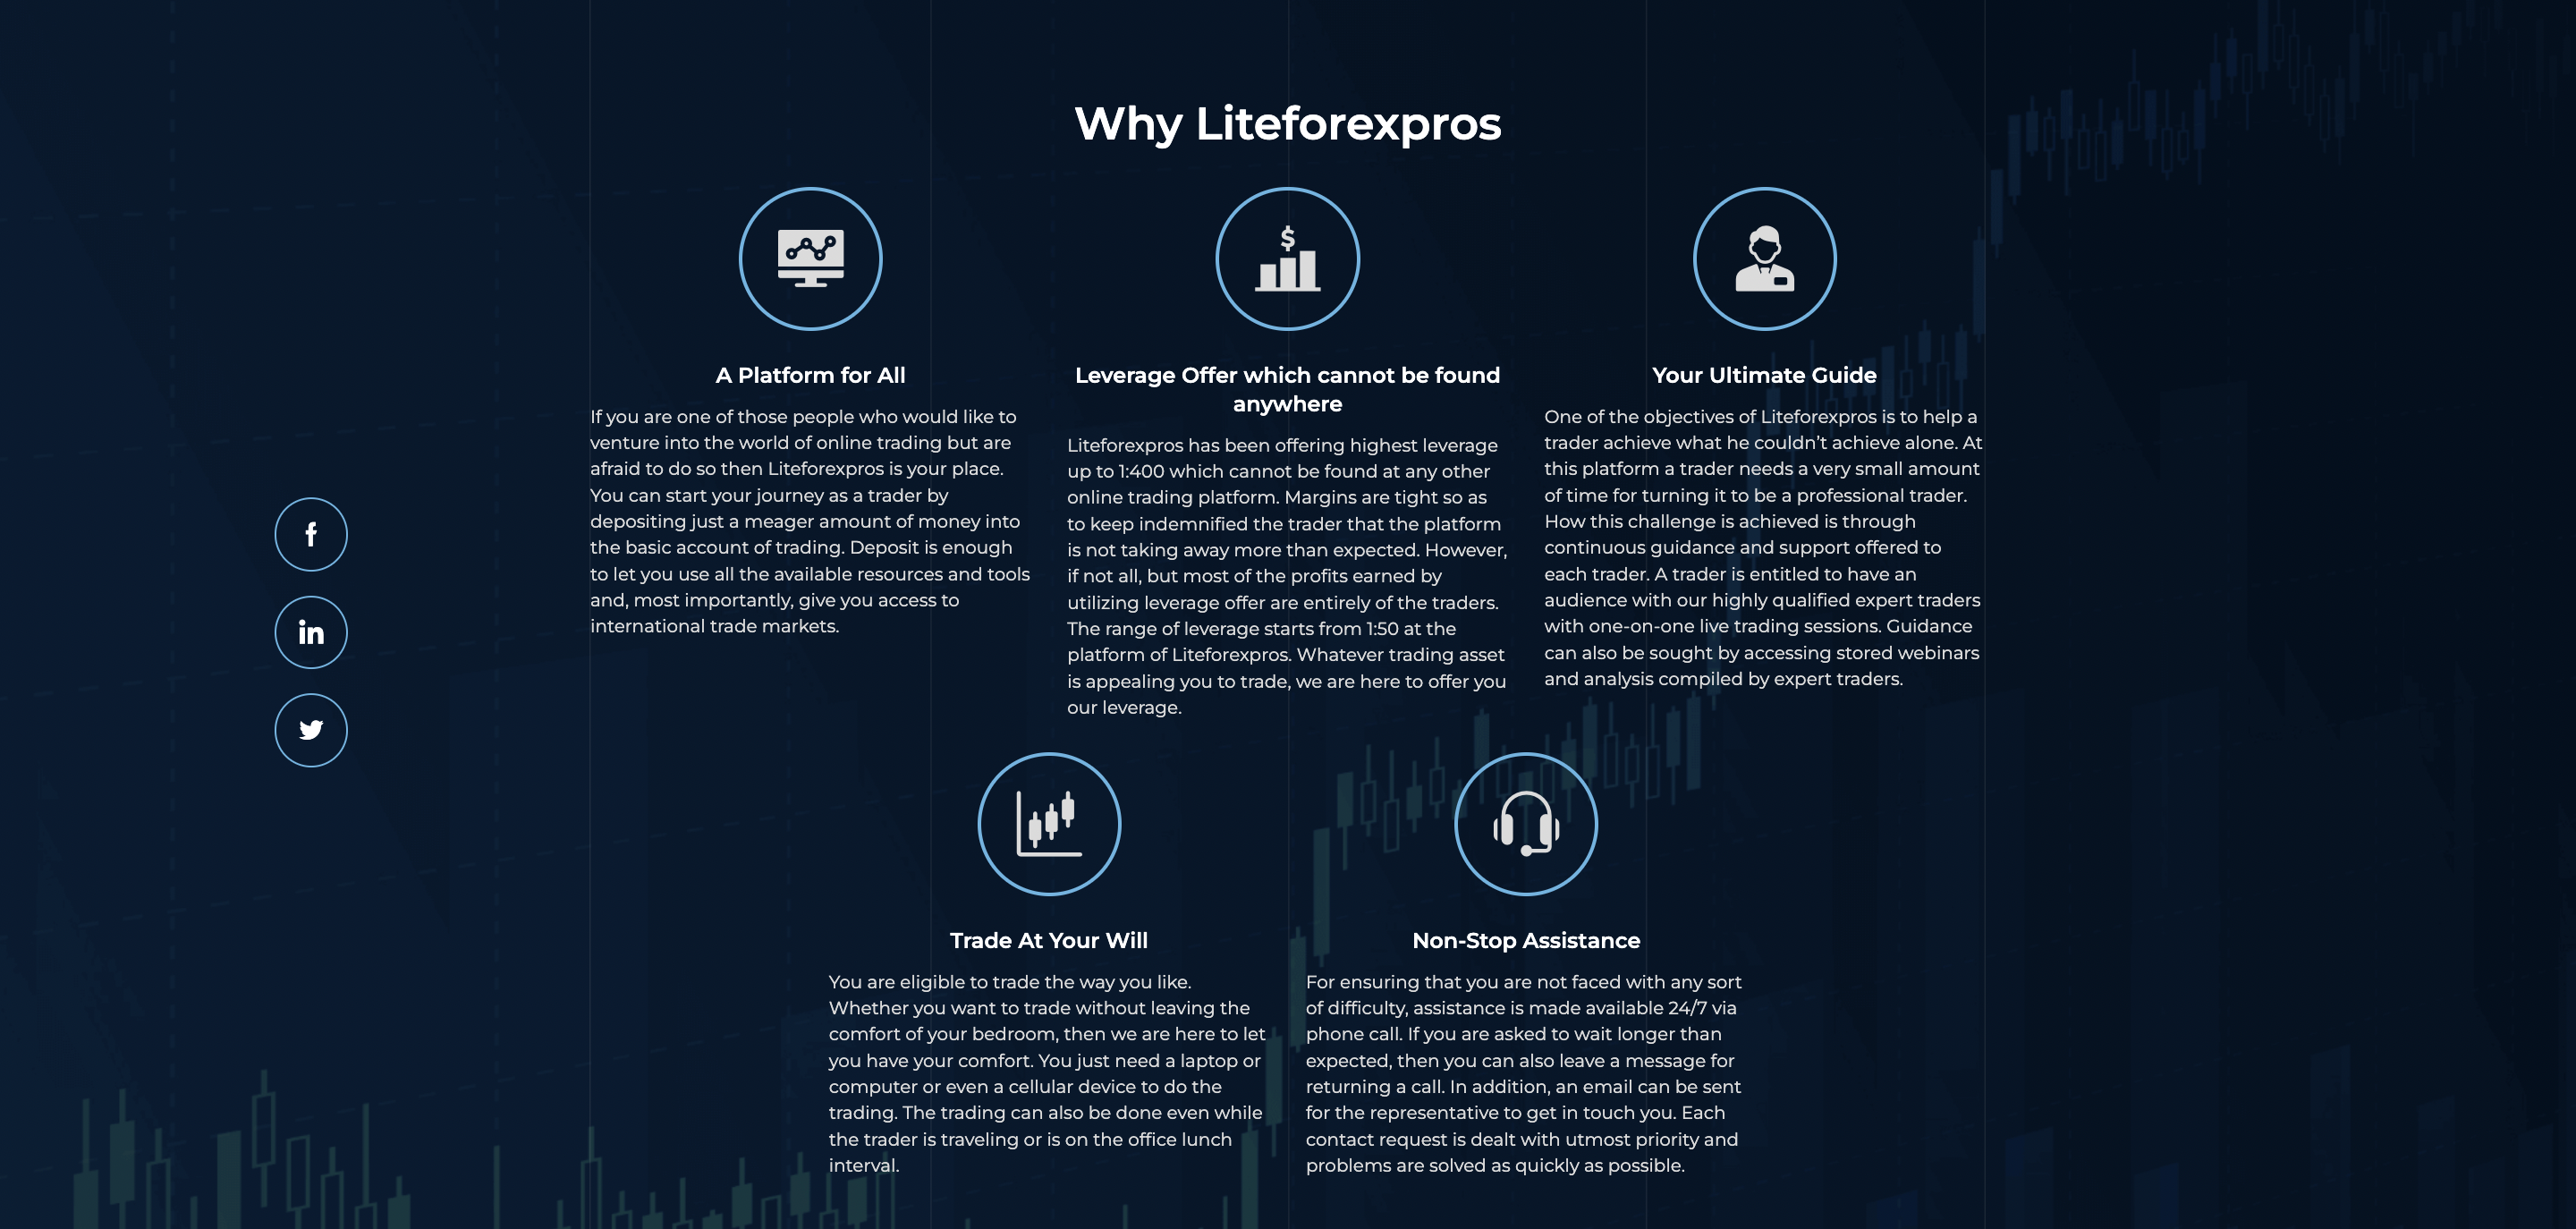 Lite Forex Pro trading platform